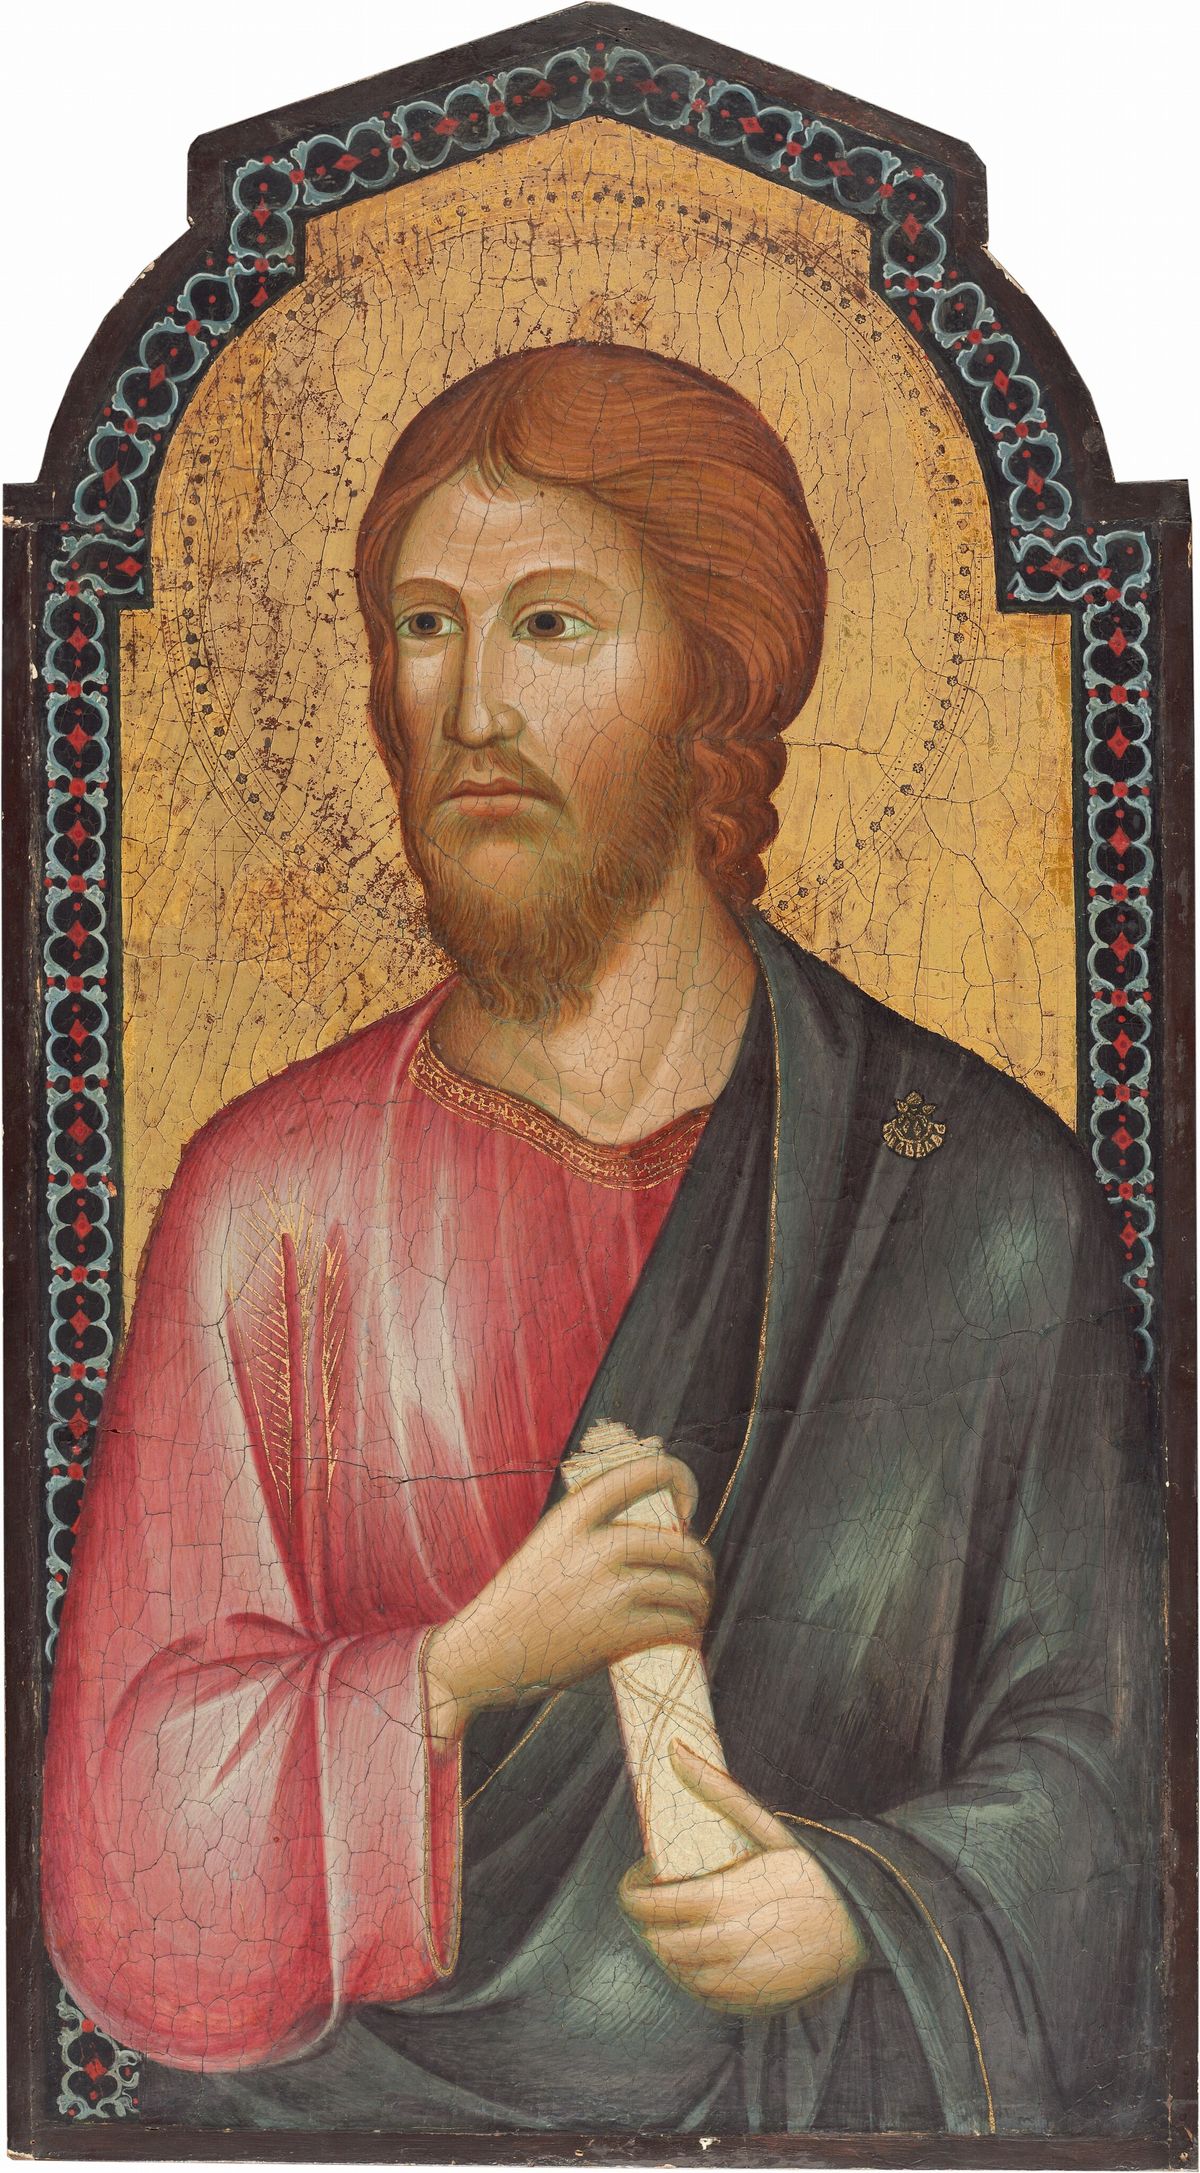 Saint James Major by Grifo di Tancredi (1310) - Public Domain Catholic Painting